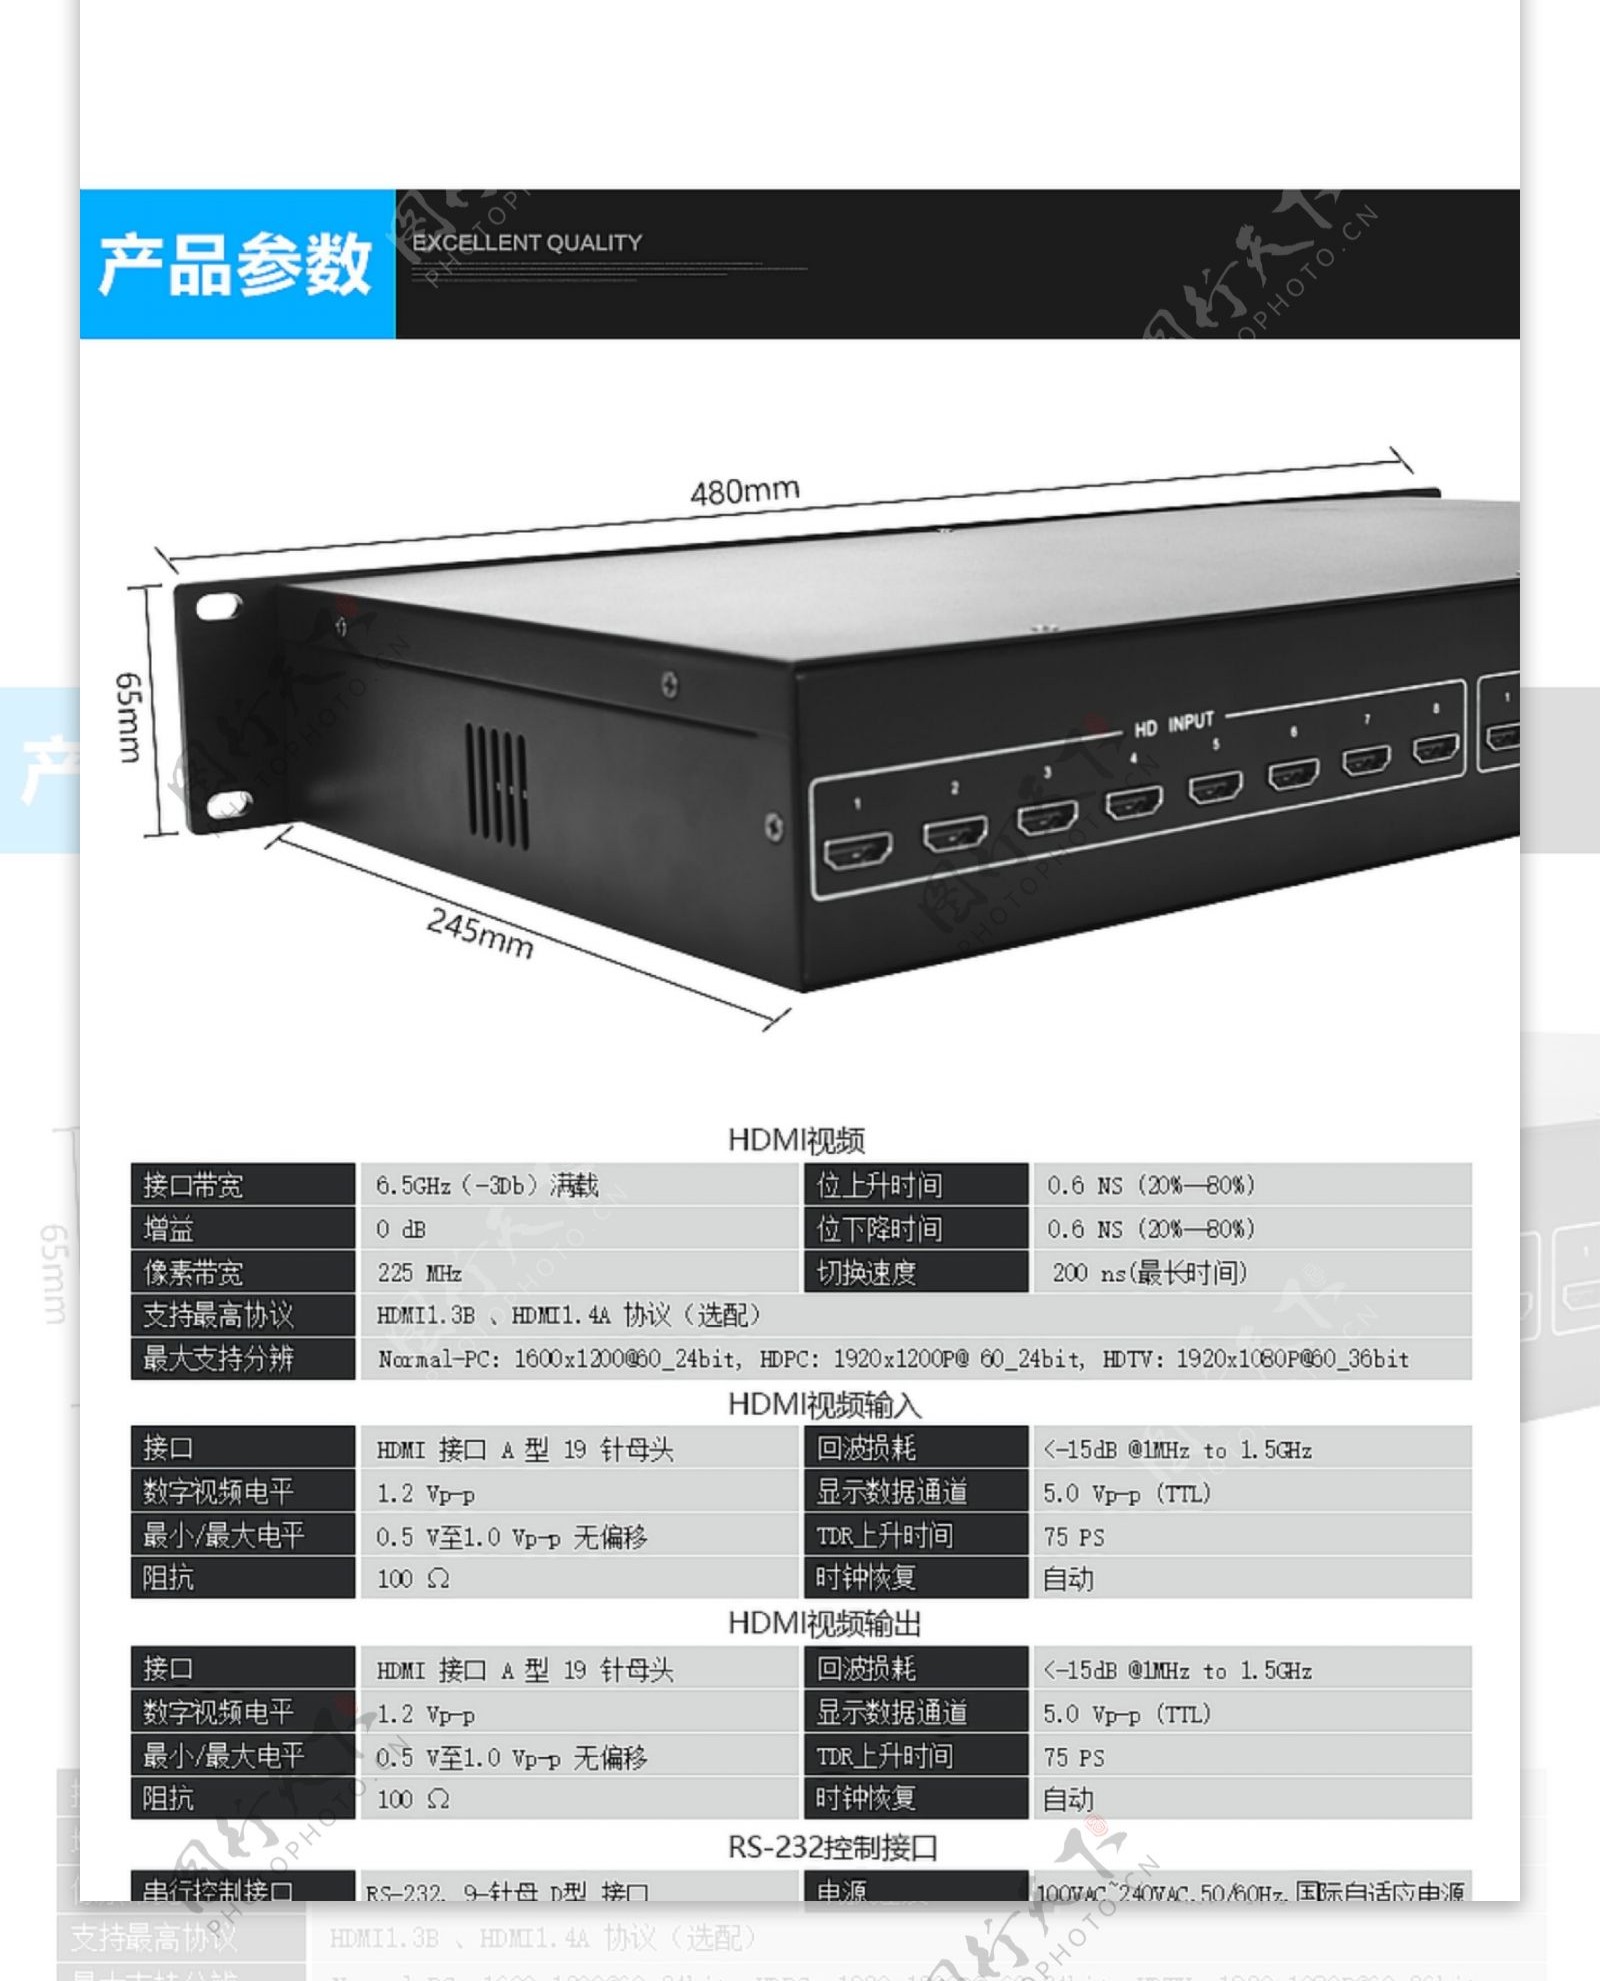 HDMI矩阵详情页